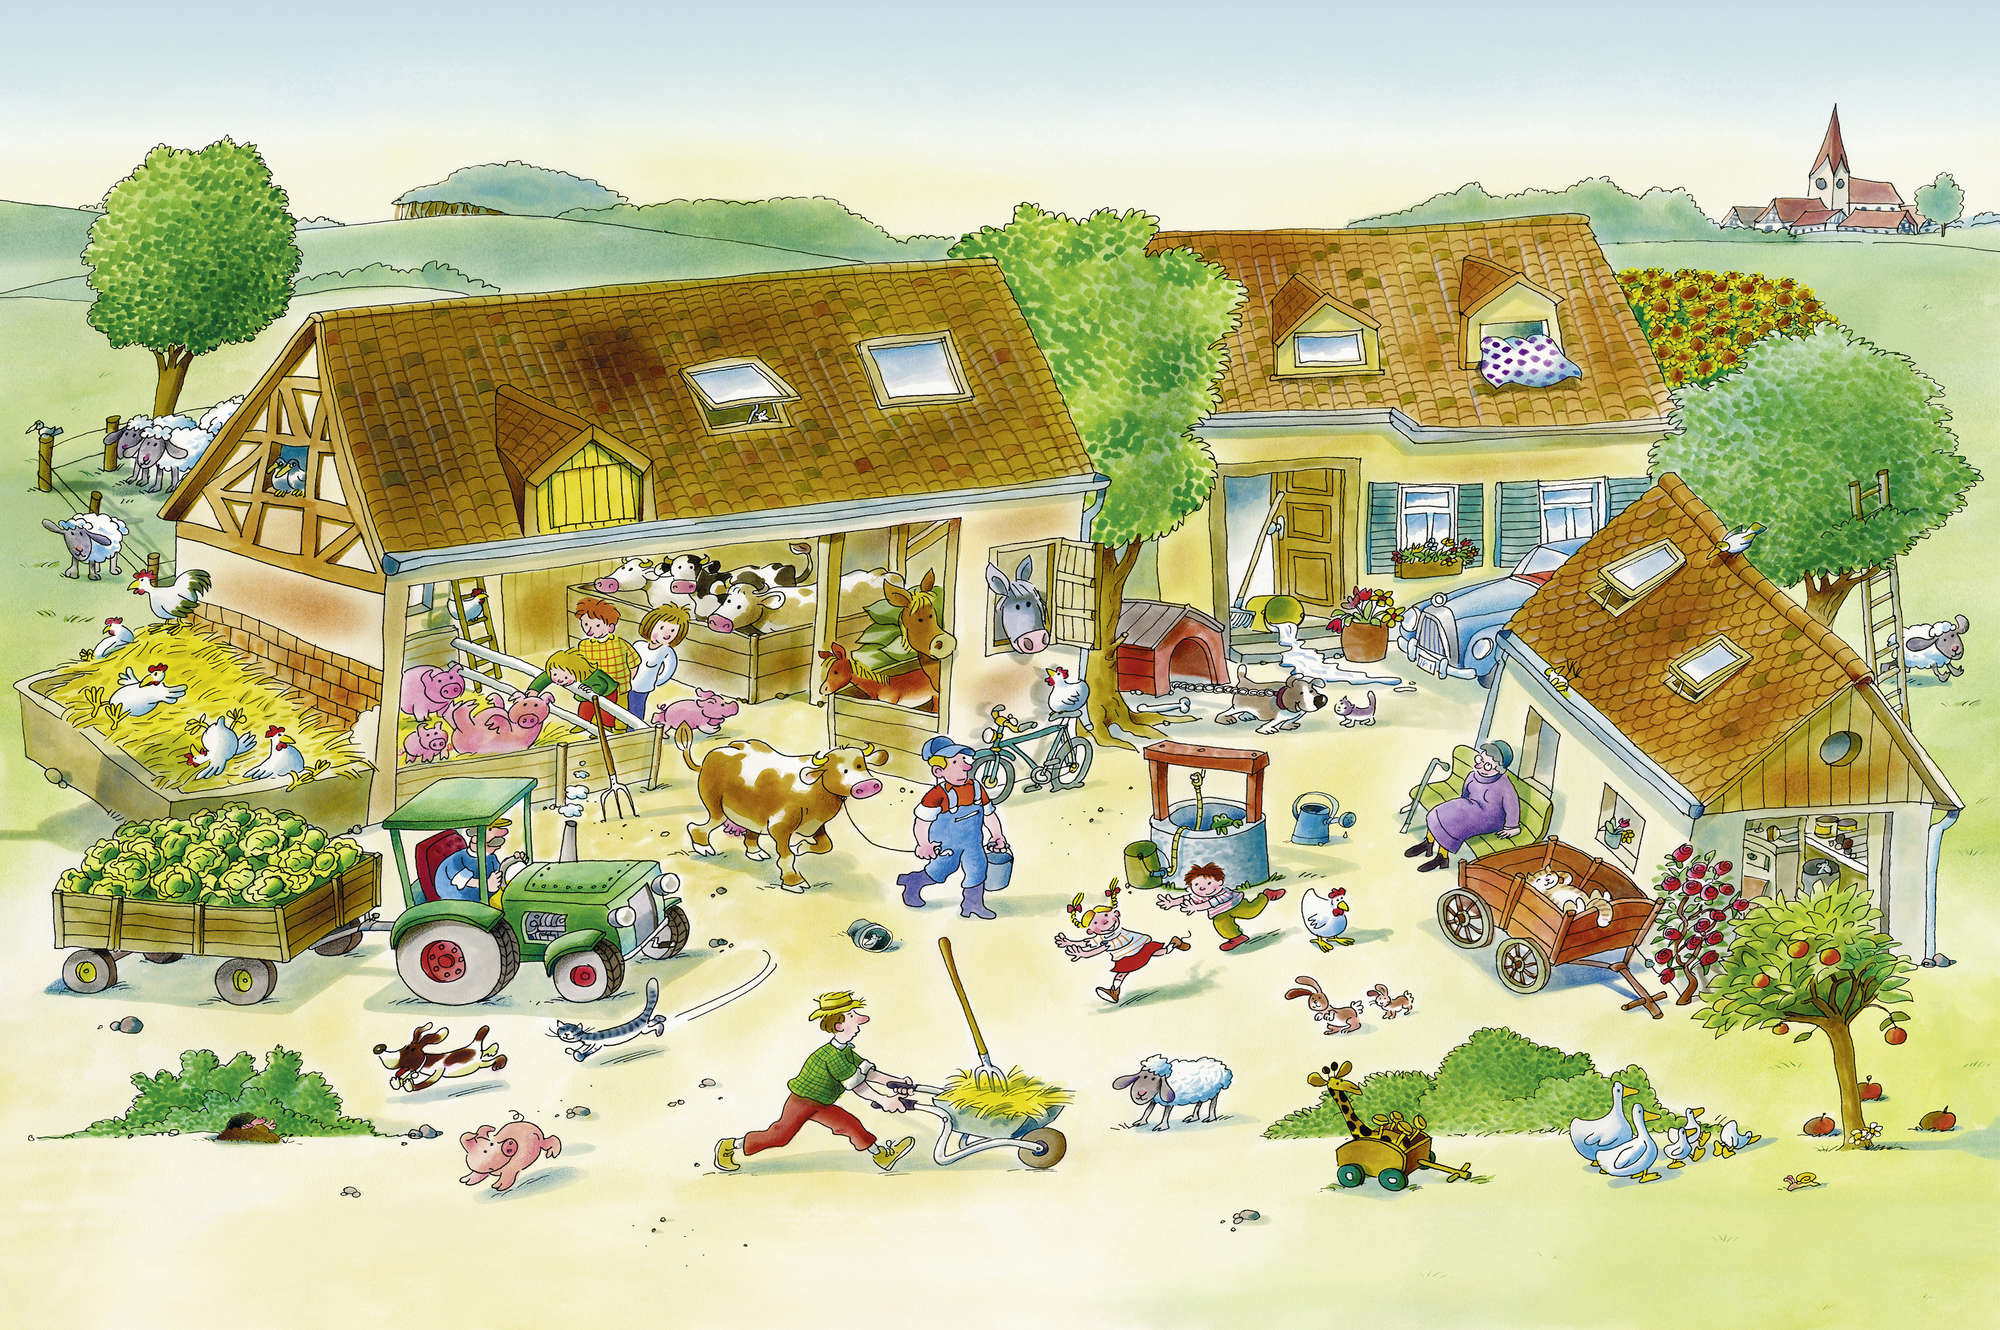             Kinderboerderijbehang met dieren in bruin en groen op parelmoer glad vlies
        